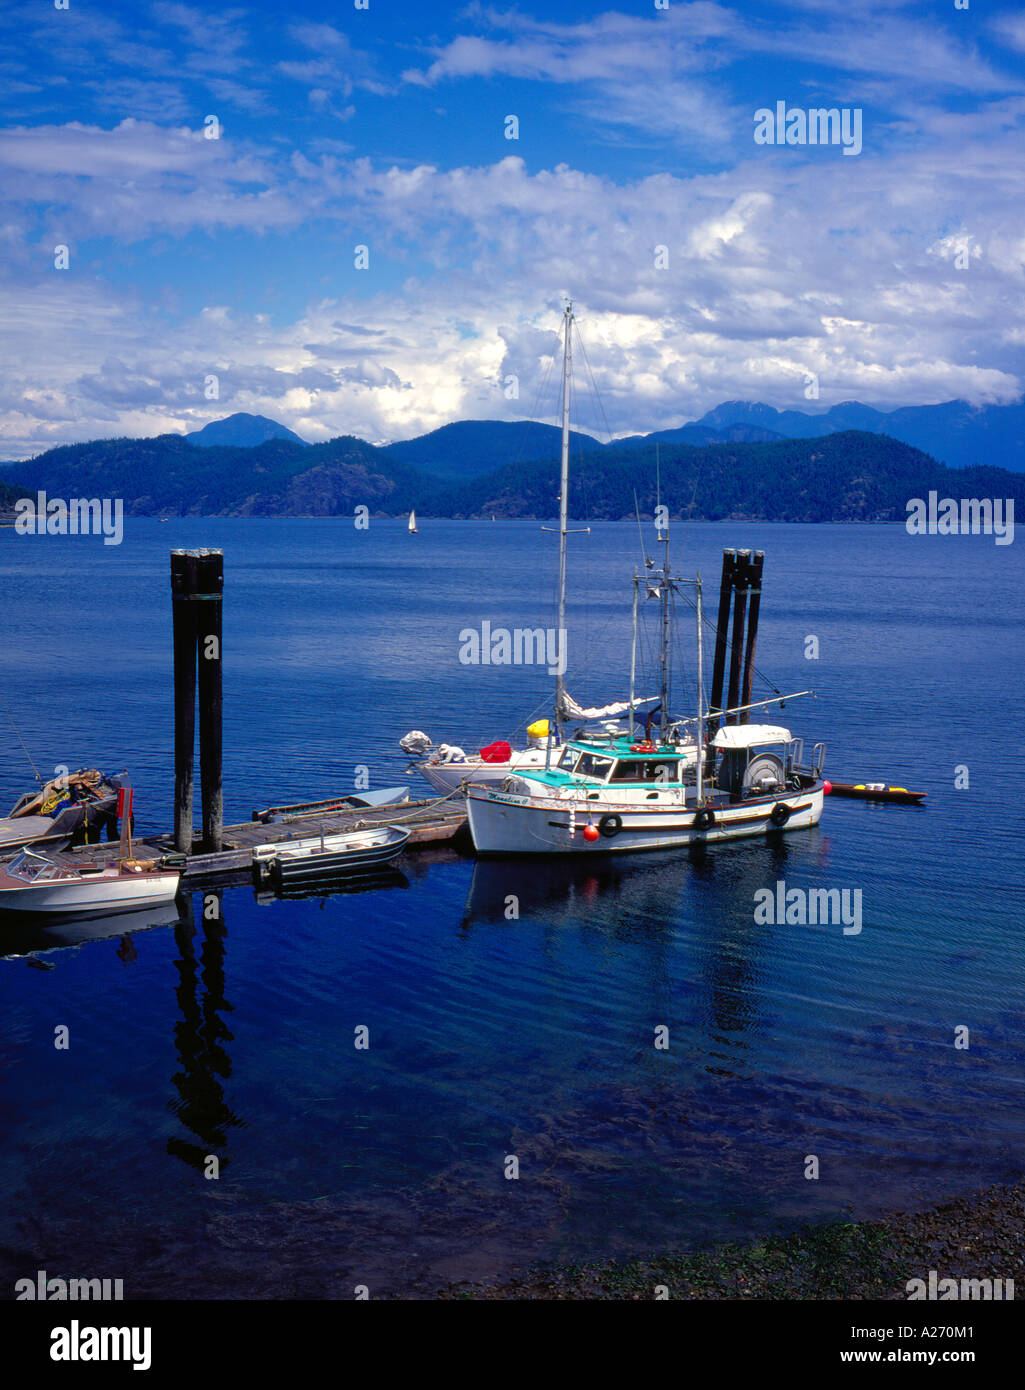 Imbarcazione a vela in Isola di Quadra, British Columbia, Canada. Foto di Willy Matheisl Foto Stock